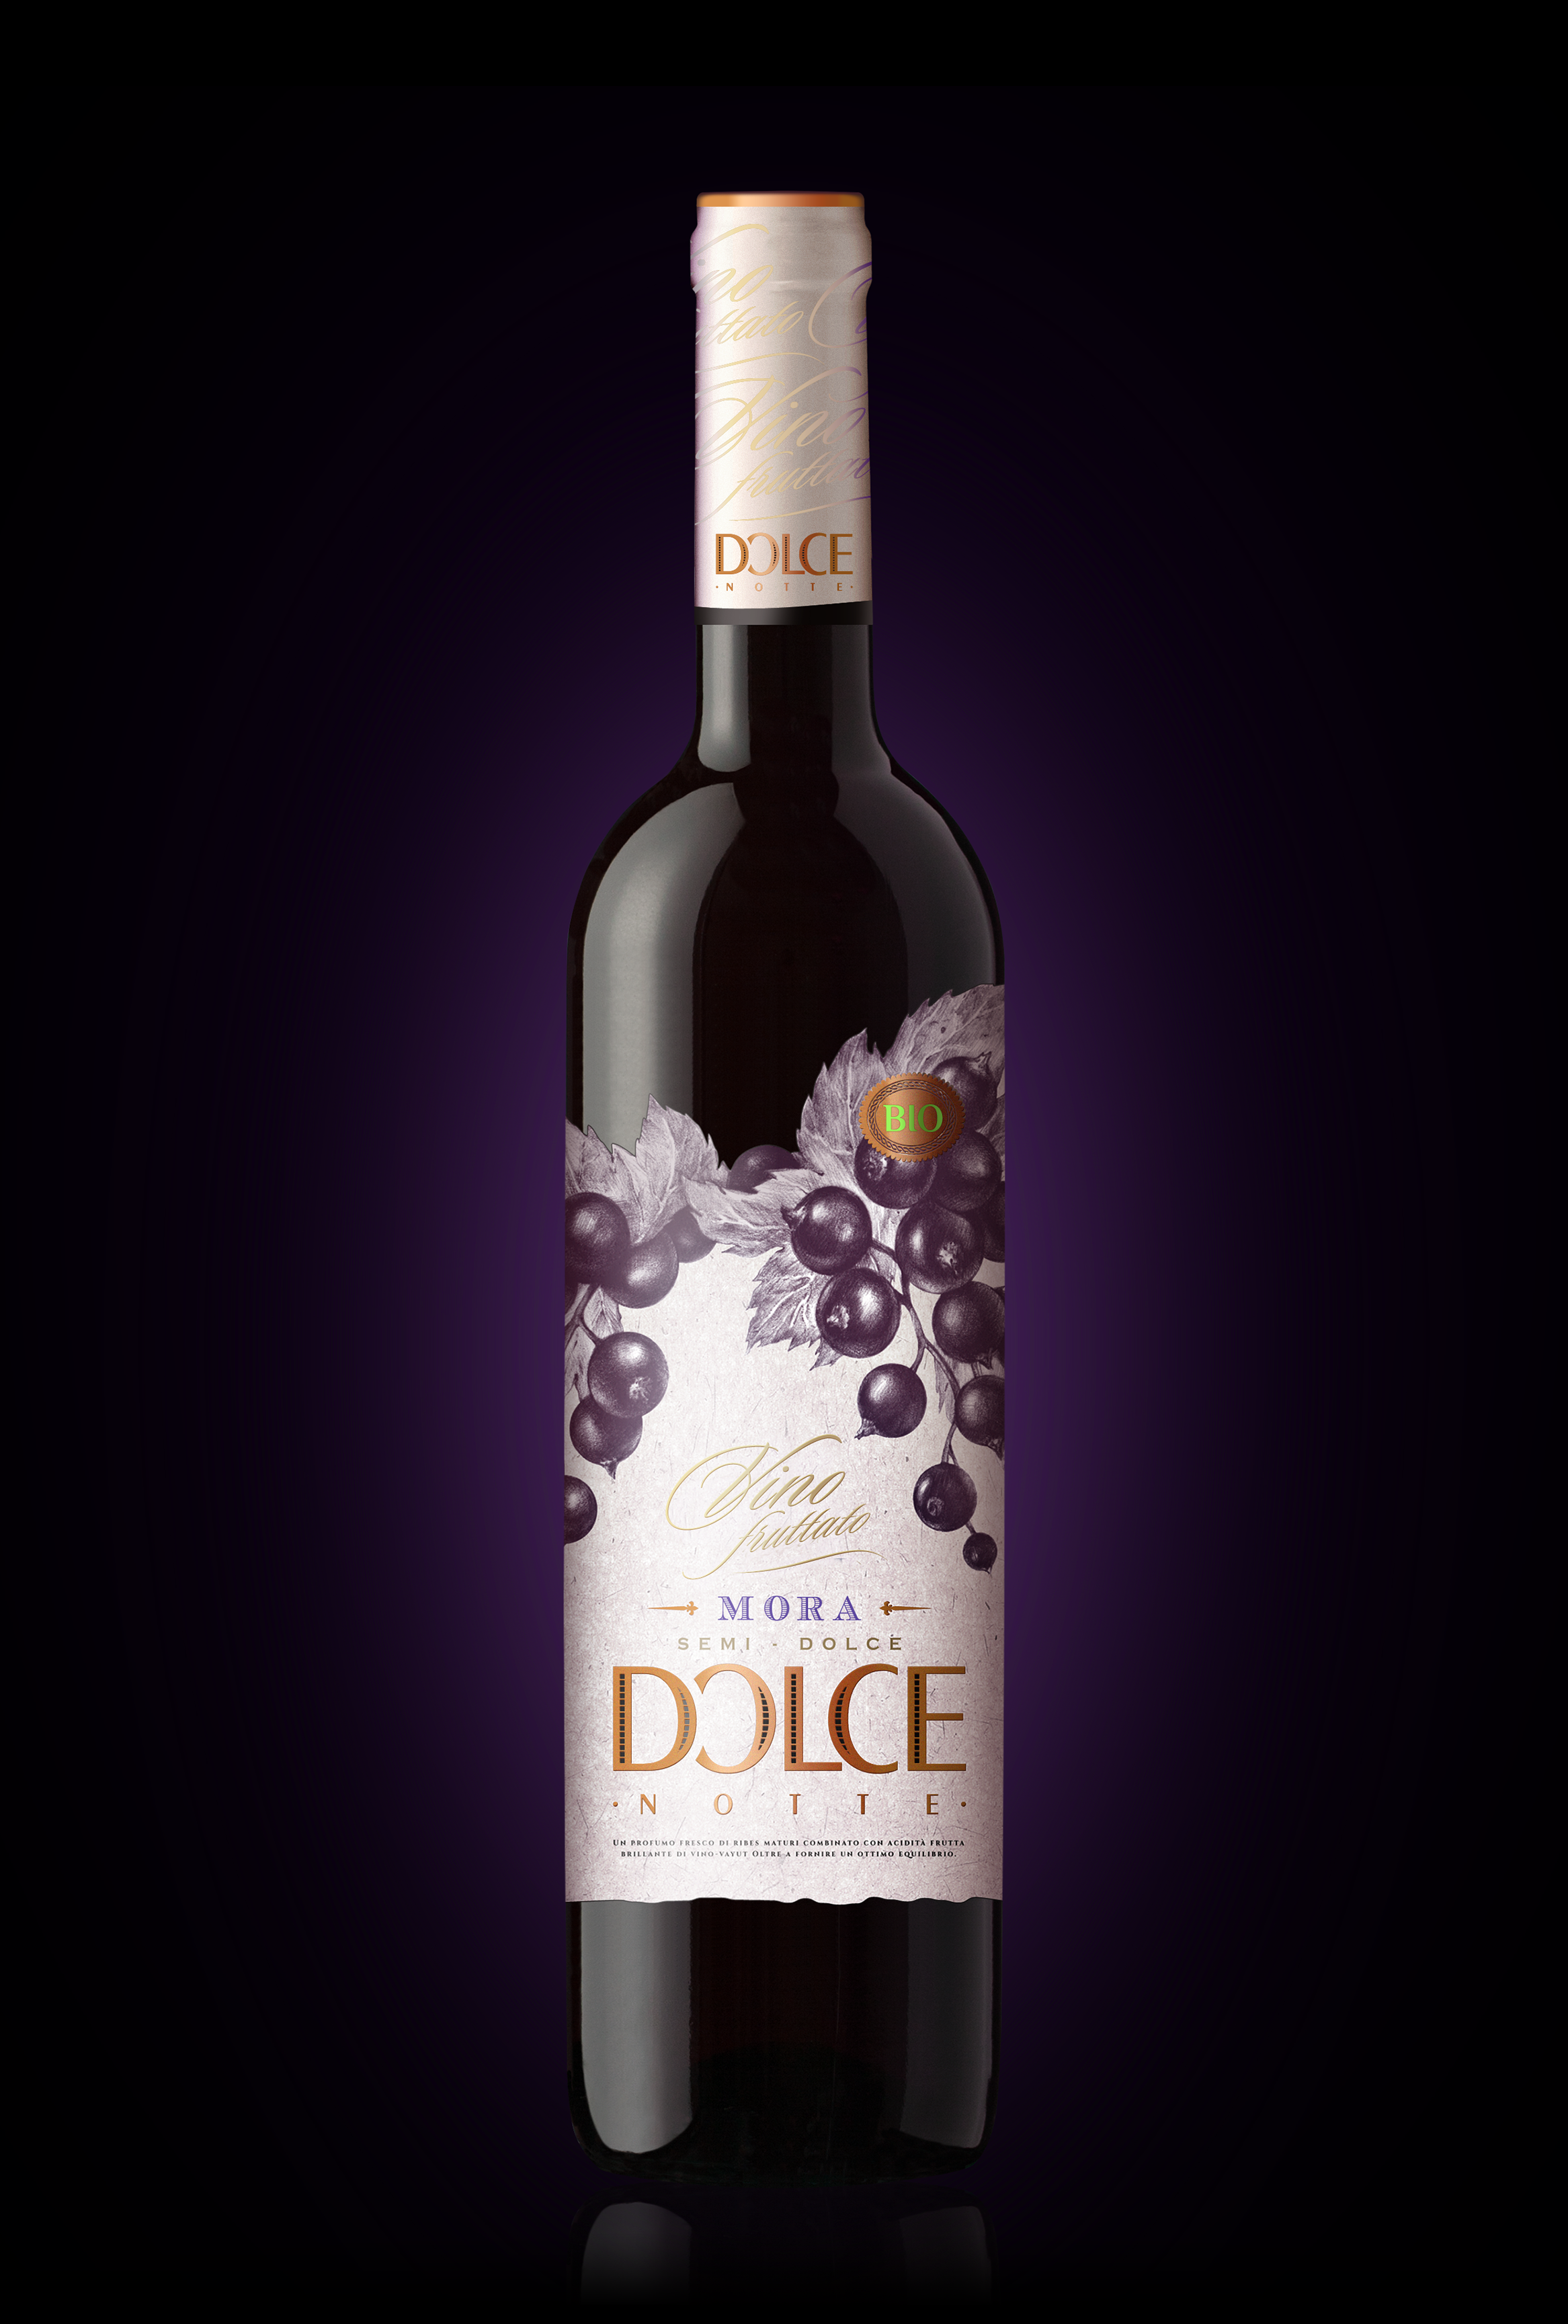 Dolce notte. Dolce notte вино. Вино Dolce notte черная смородина. Dolche dolche вино. Вино Дольче Нотте черная смородина.